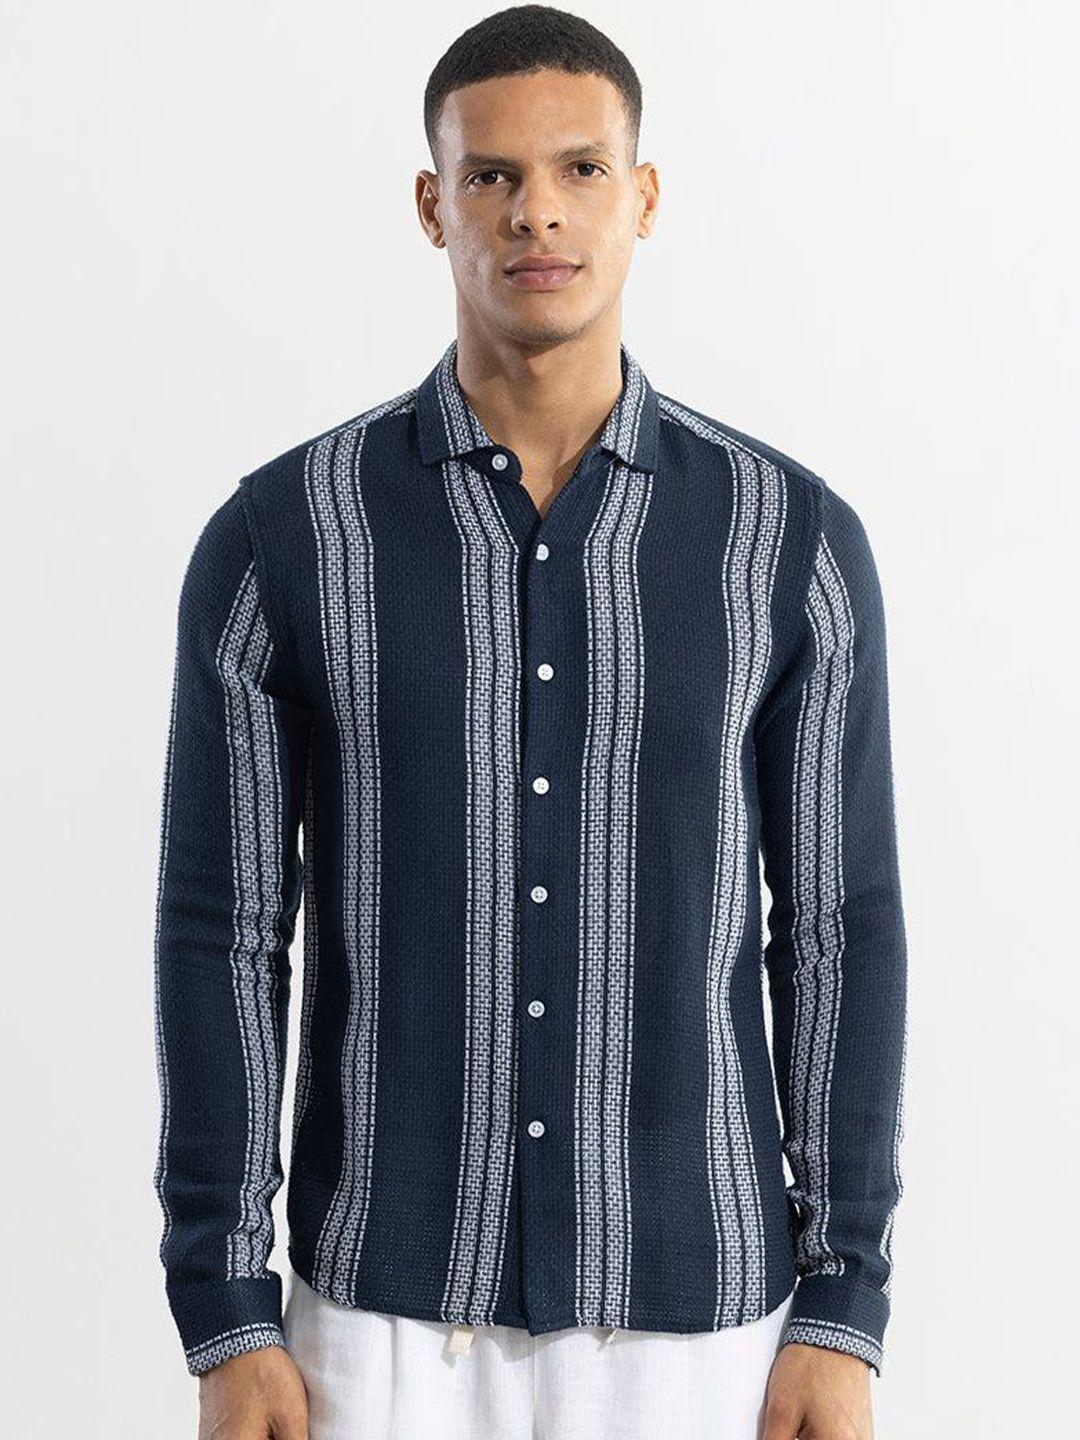 snitch ethnic motifs printed spread collar classic slim fit striped casual shirt